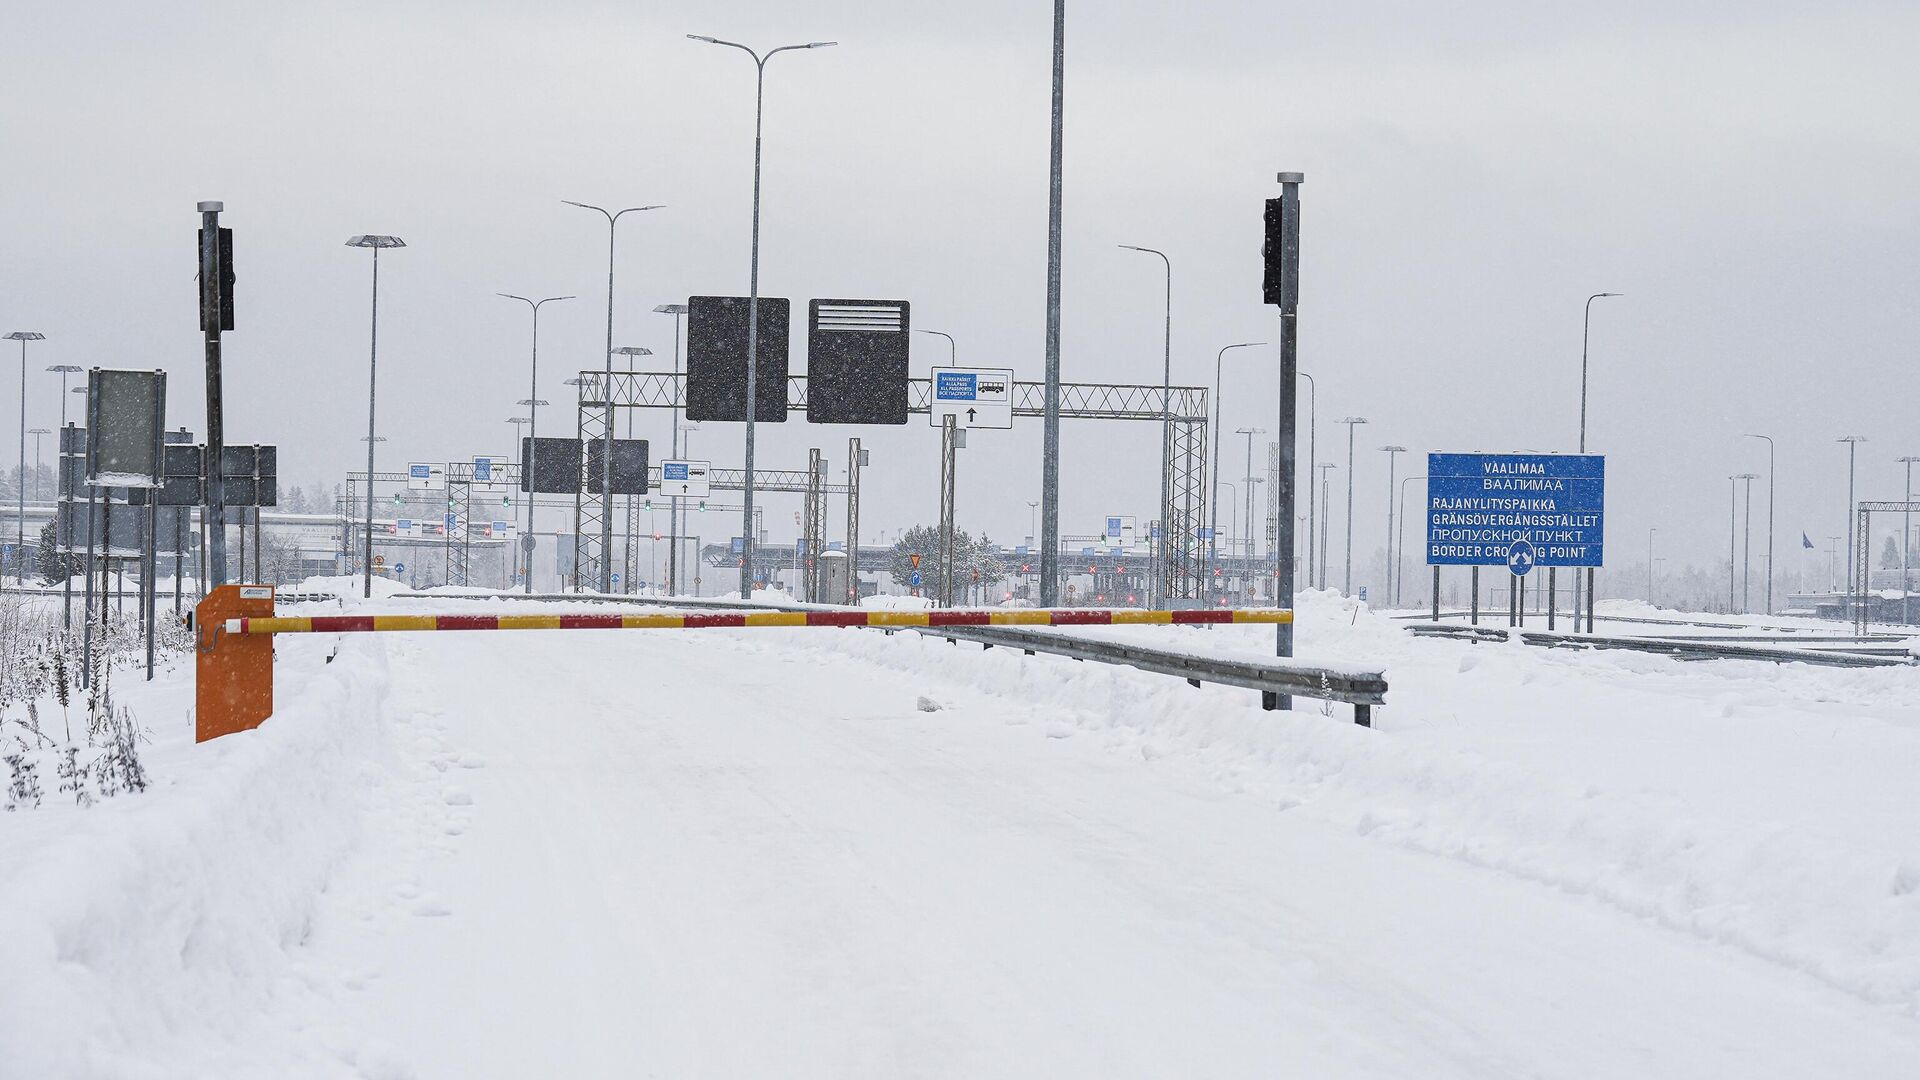 Через границу Финляндии и России проехало 190 легковушек и 24 грузовика